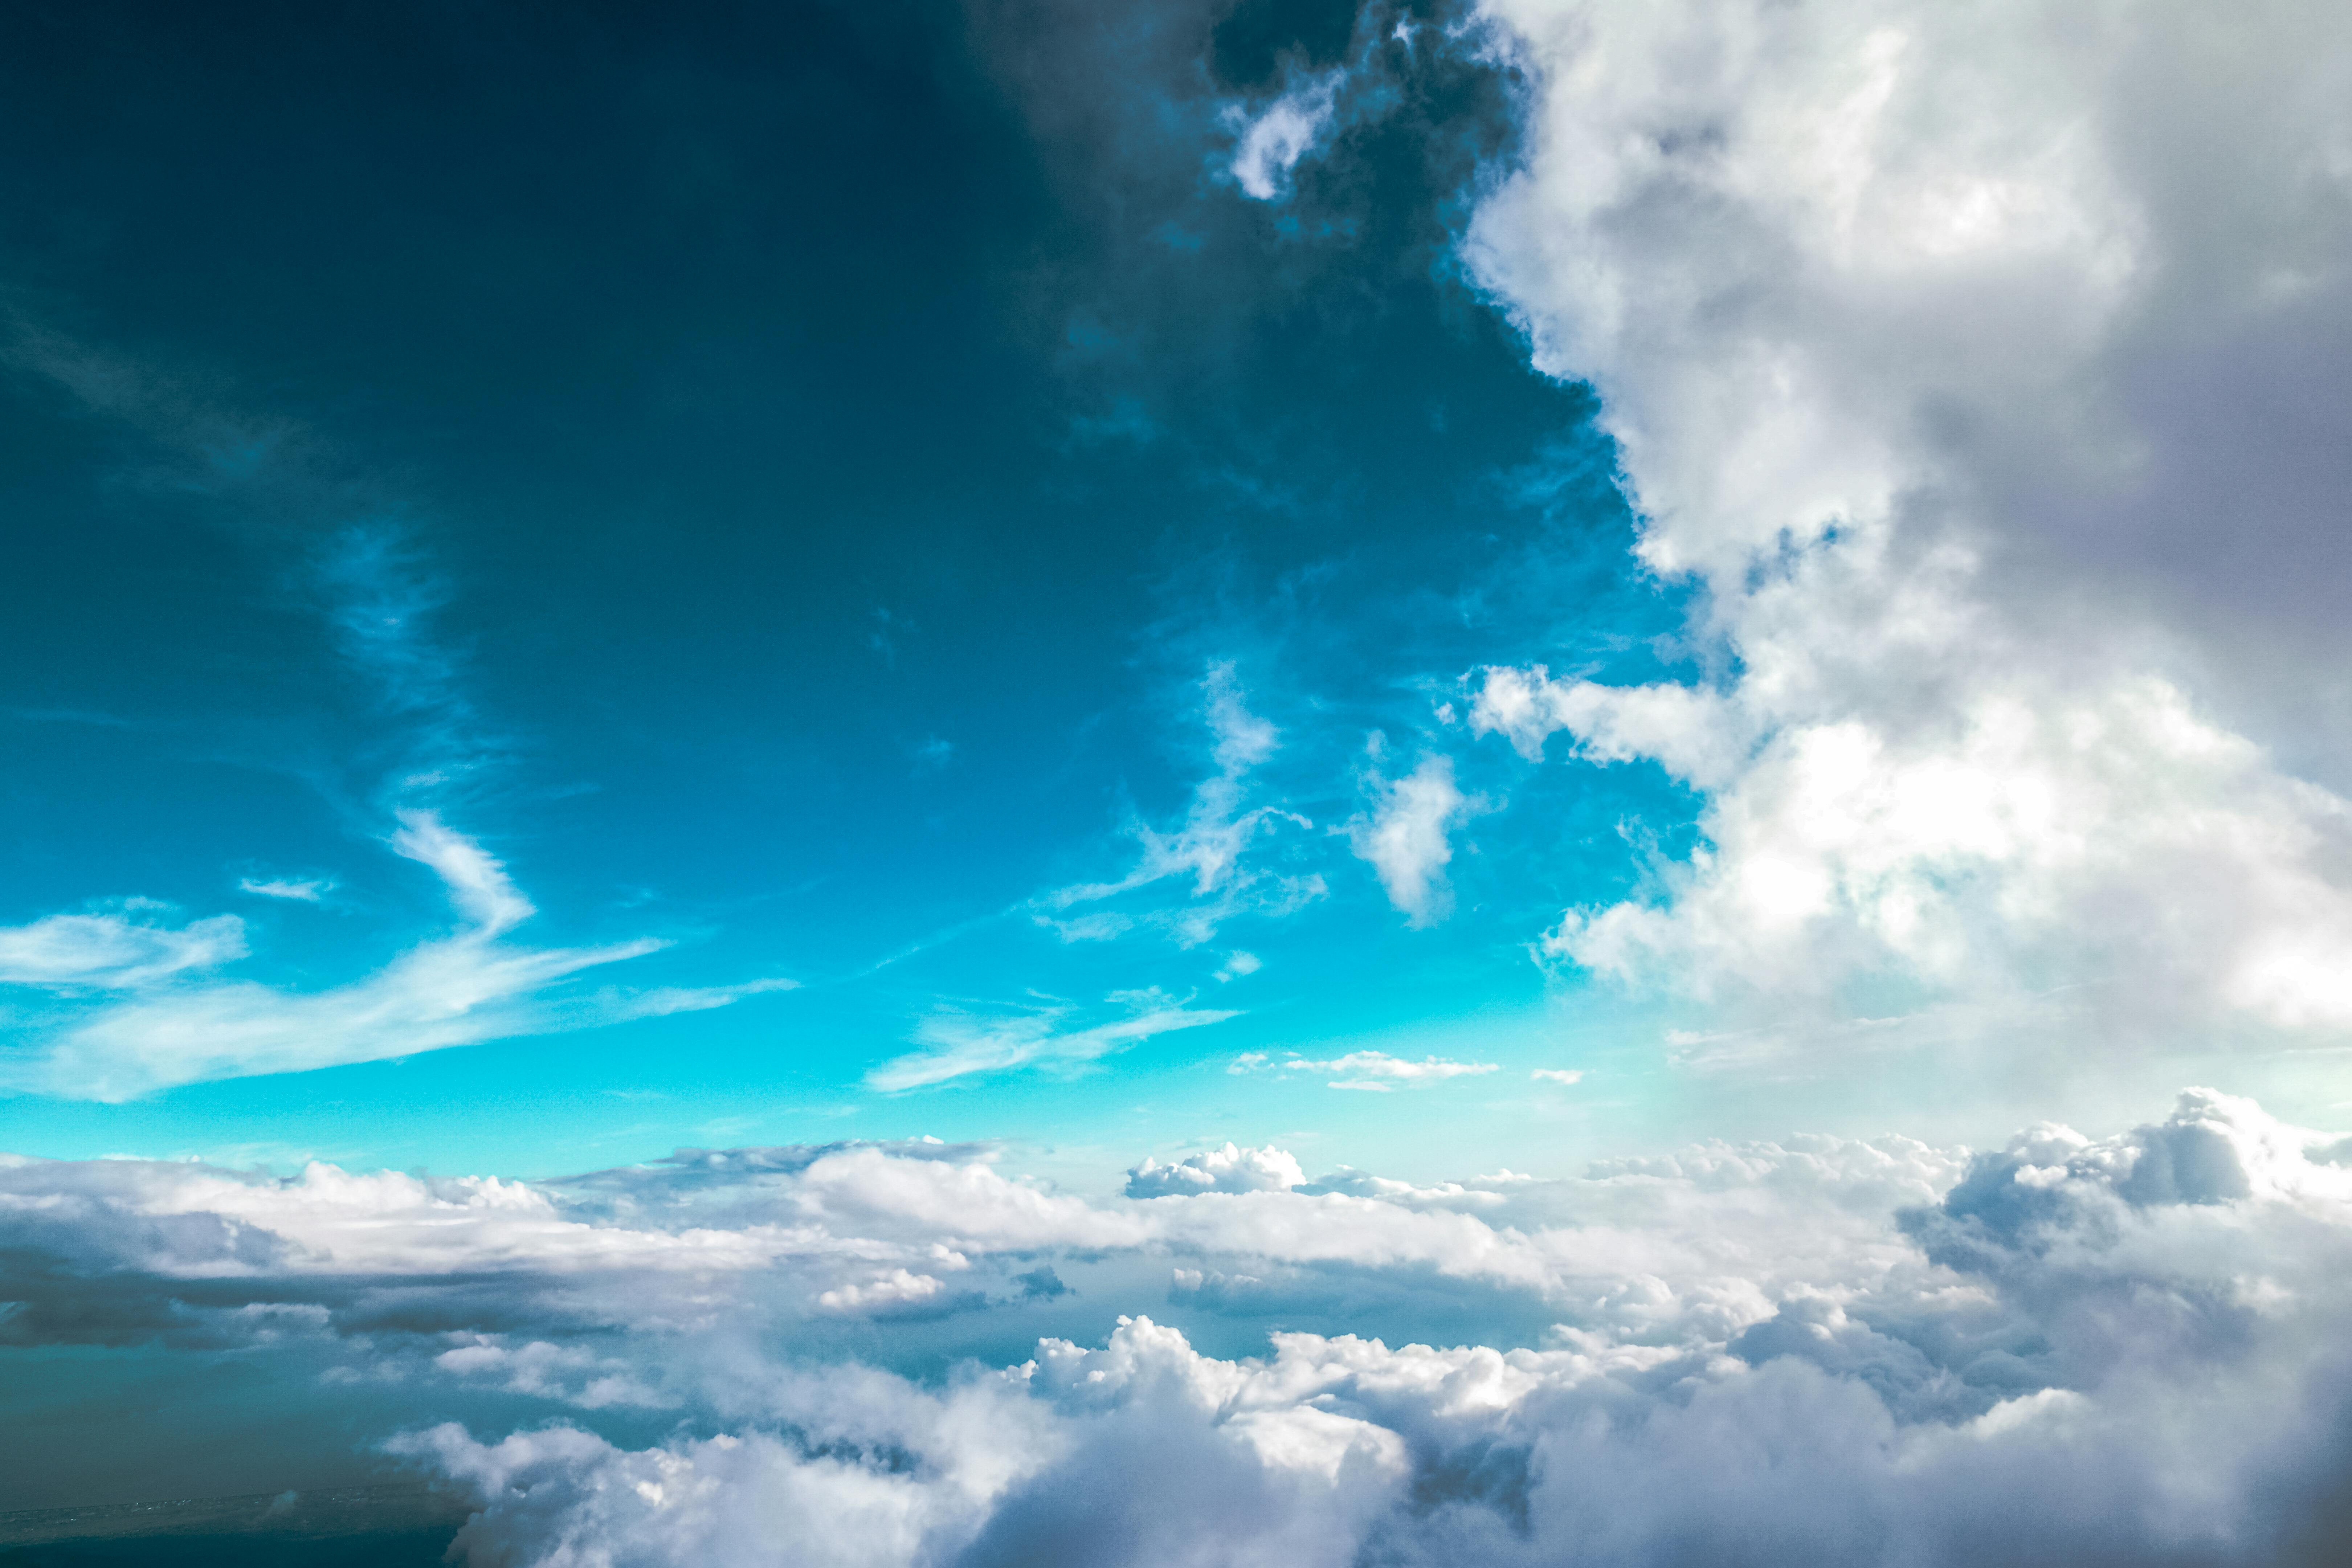 Best 100 Cloud Pictures HQ  Download Free Images on Unsplash